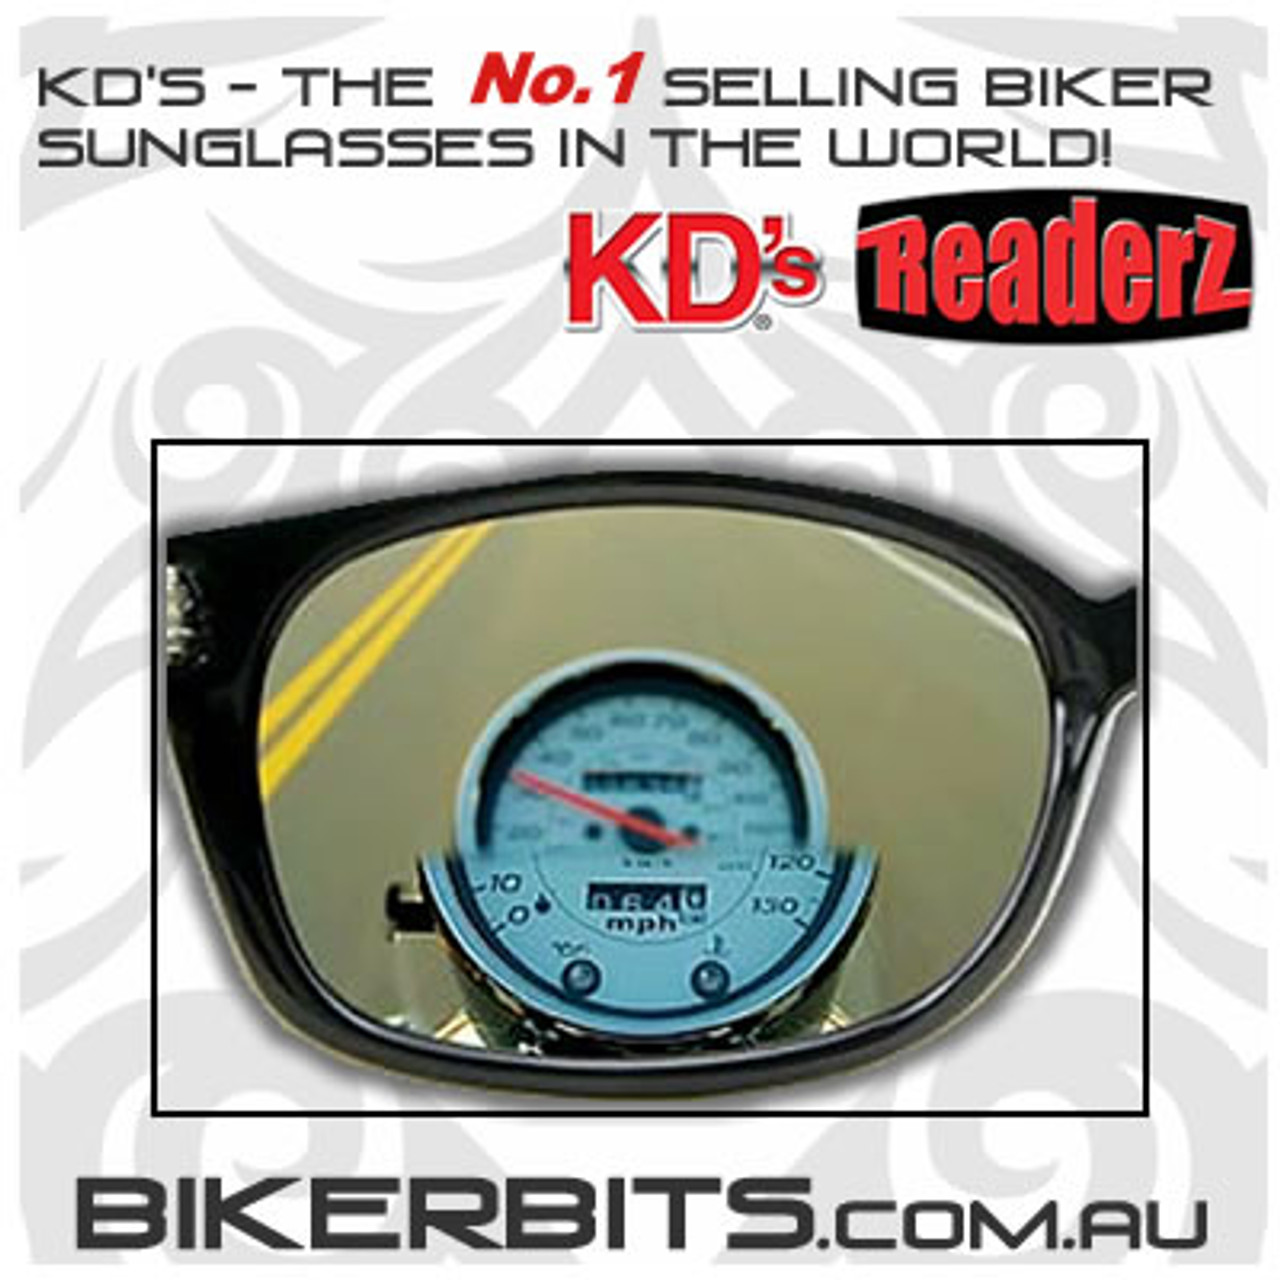 Motorcycle Sunglasses - X KD's Bi-Focal Readerz - Clear - 2.00